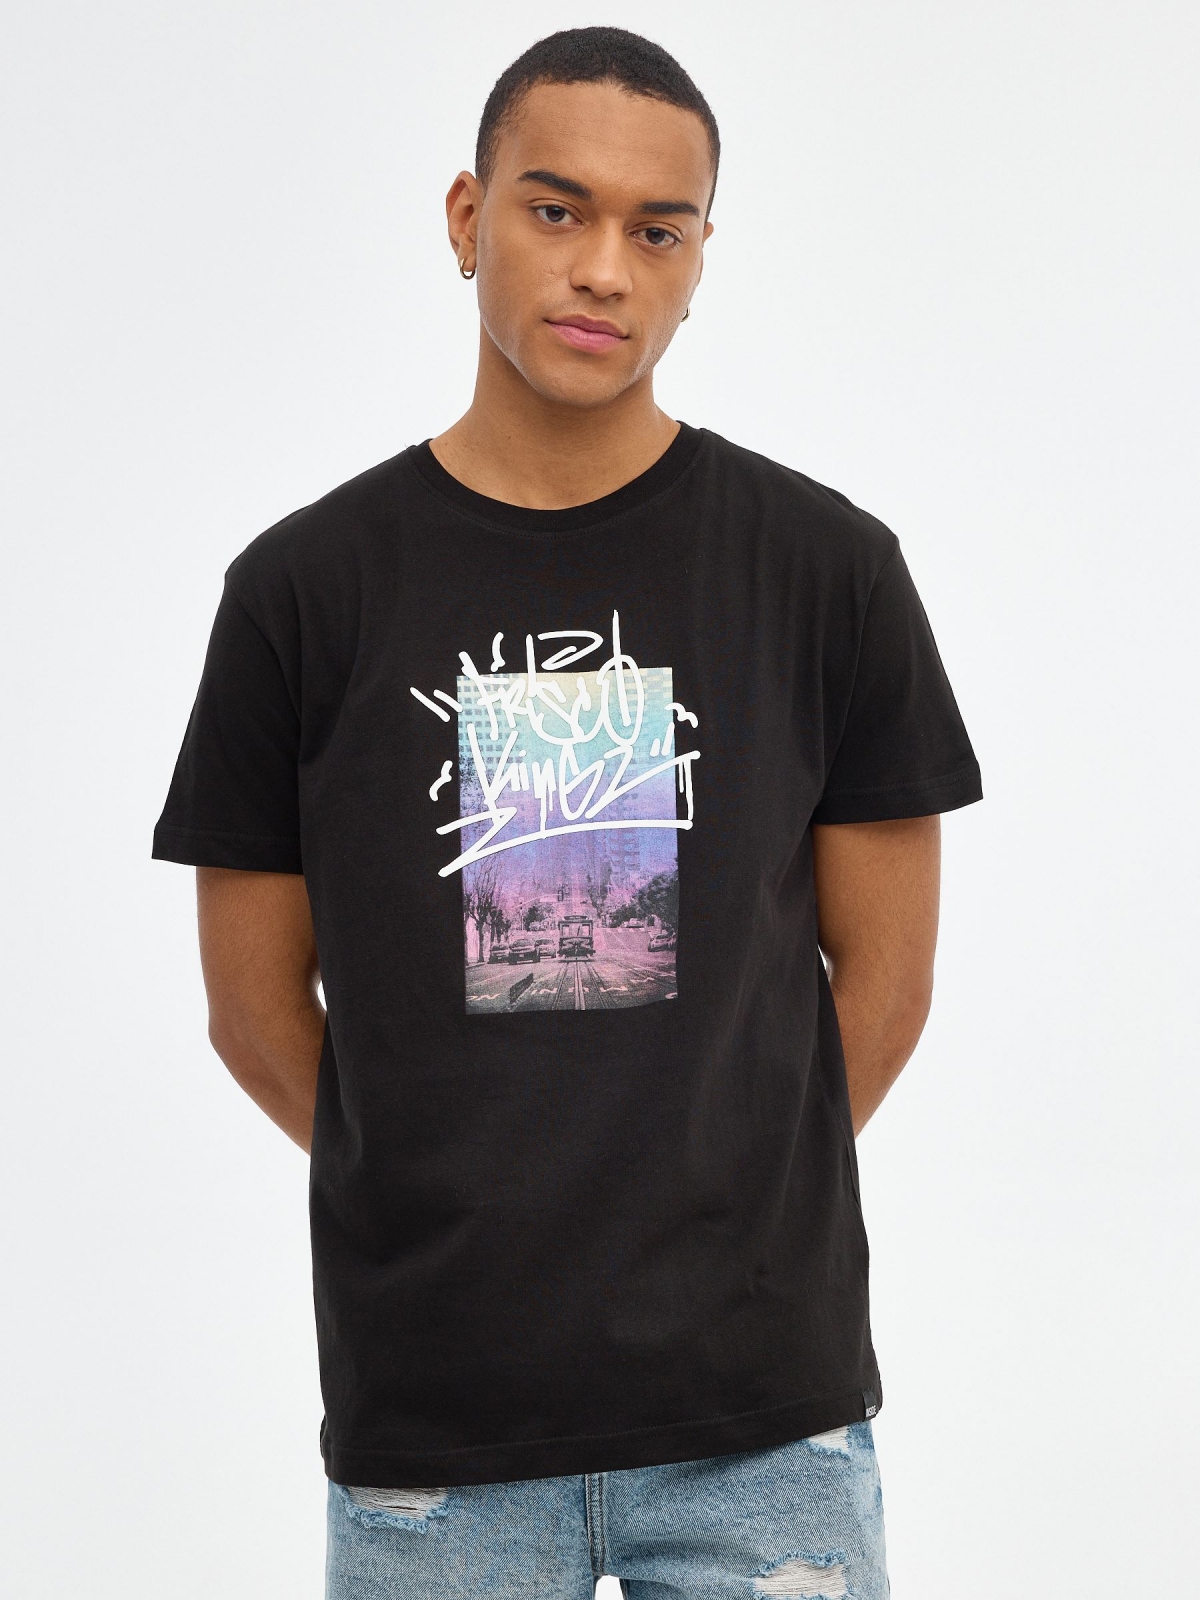 Camiseta con foto y grafiti negro vista media frontal